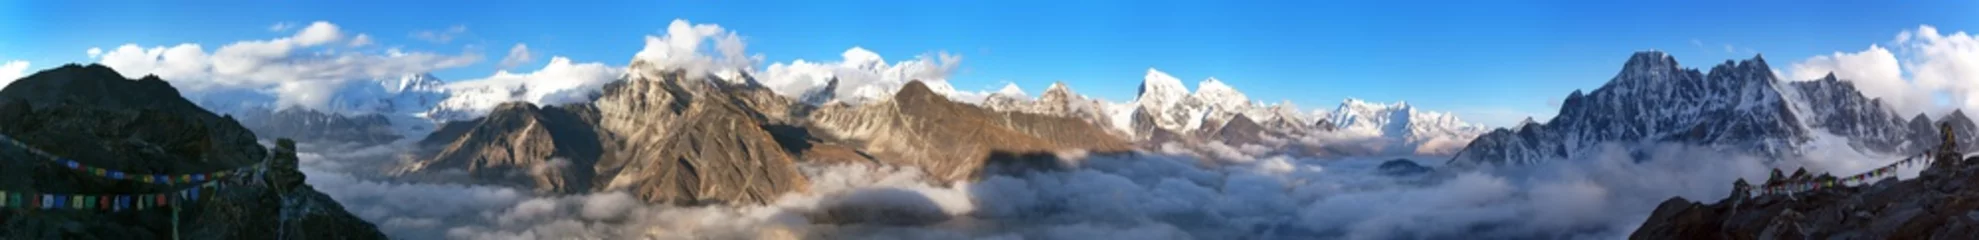 Papier Peint photo Cho Oyu Panorama du mont Everest, du Lhotse, du Makalu et du Cho Oyu